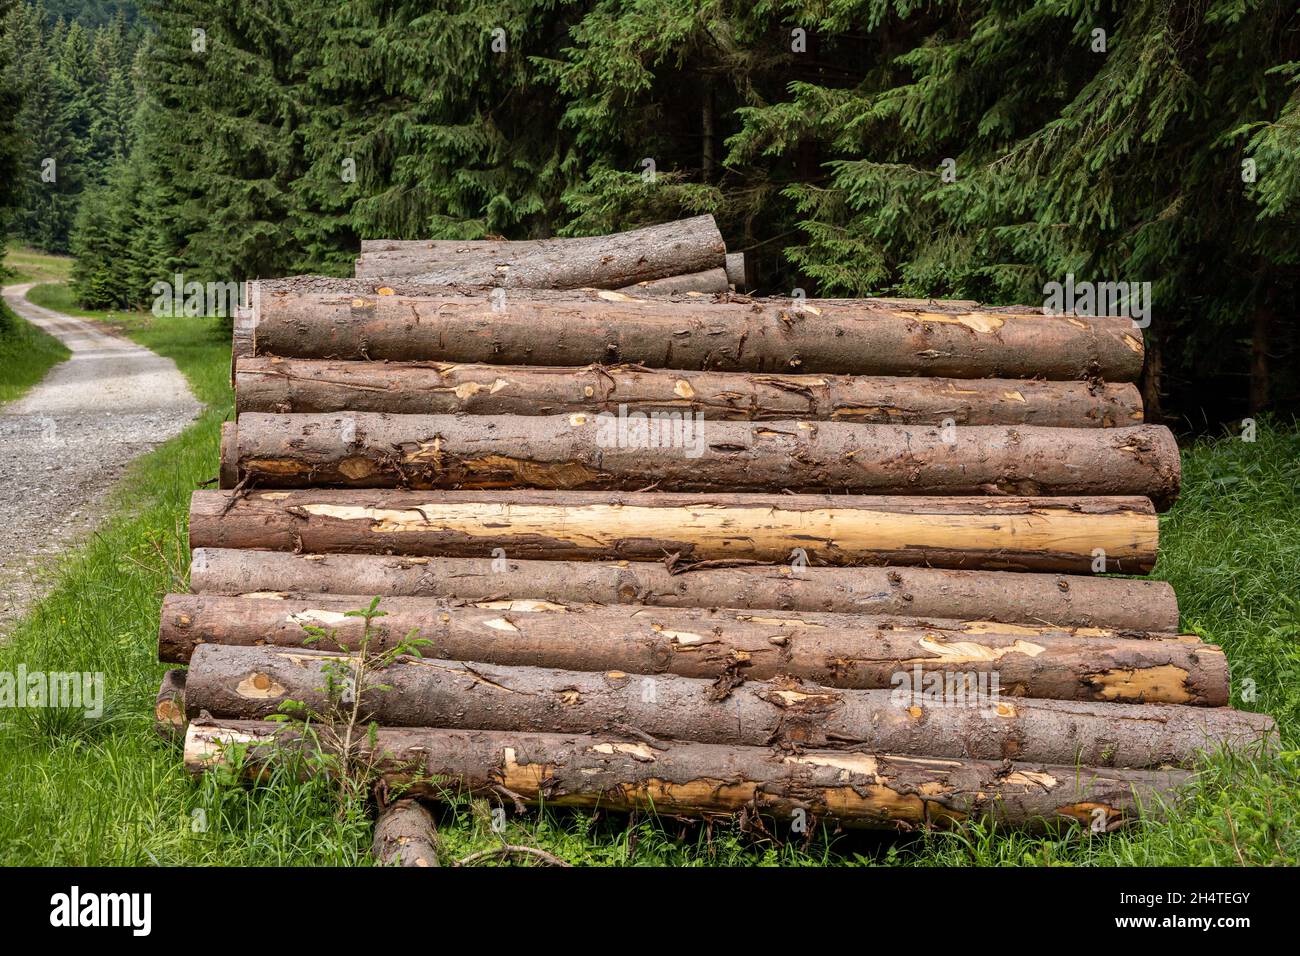 Pila de madera de pino apilada al aire libre. Foto de stock